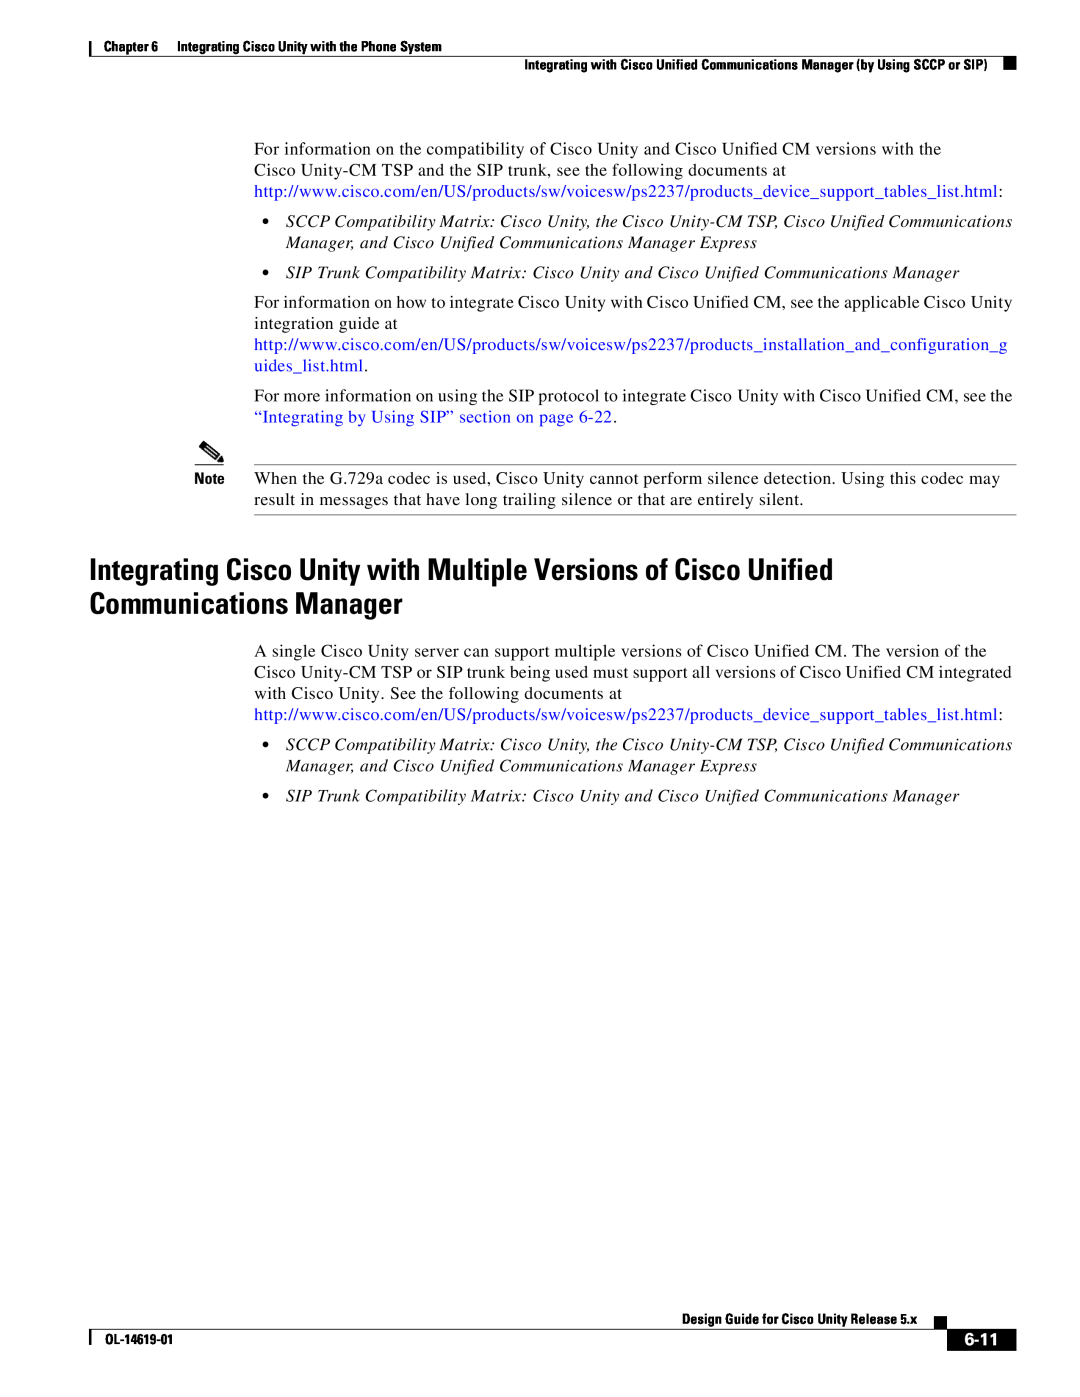 Cisco Systems OL-14619-01 manual 6-11 